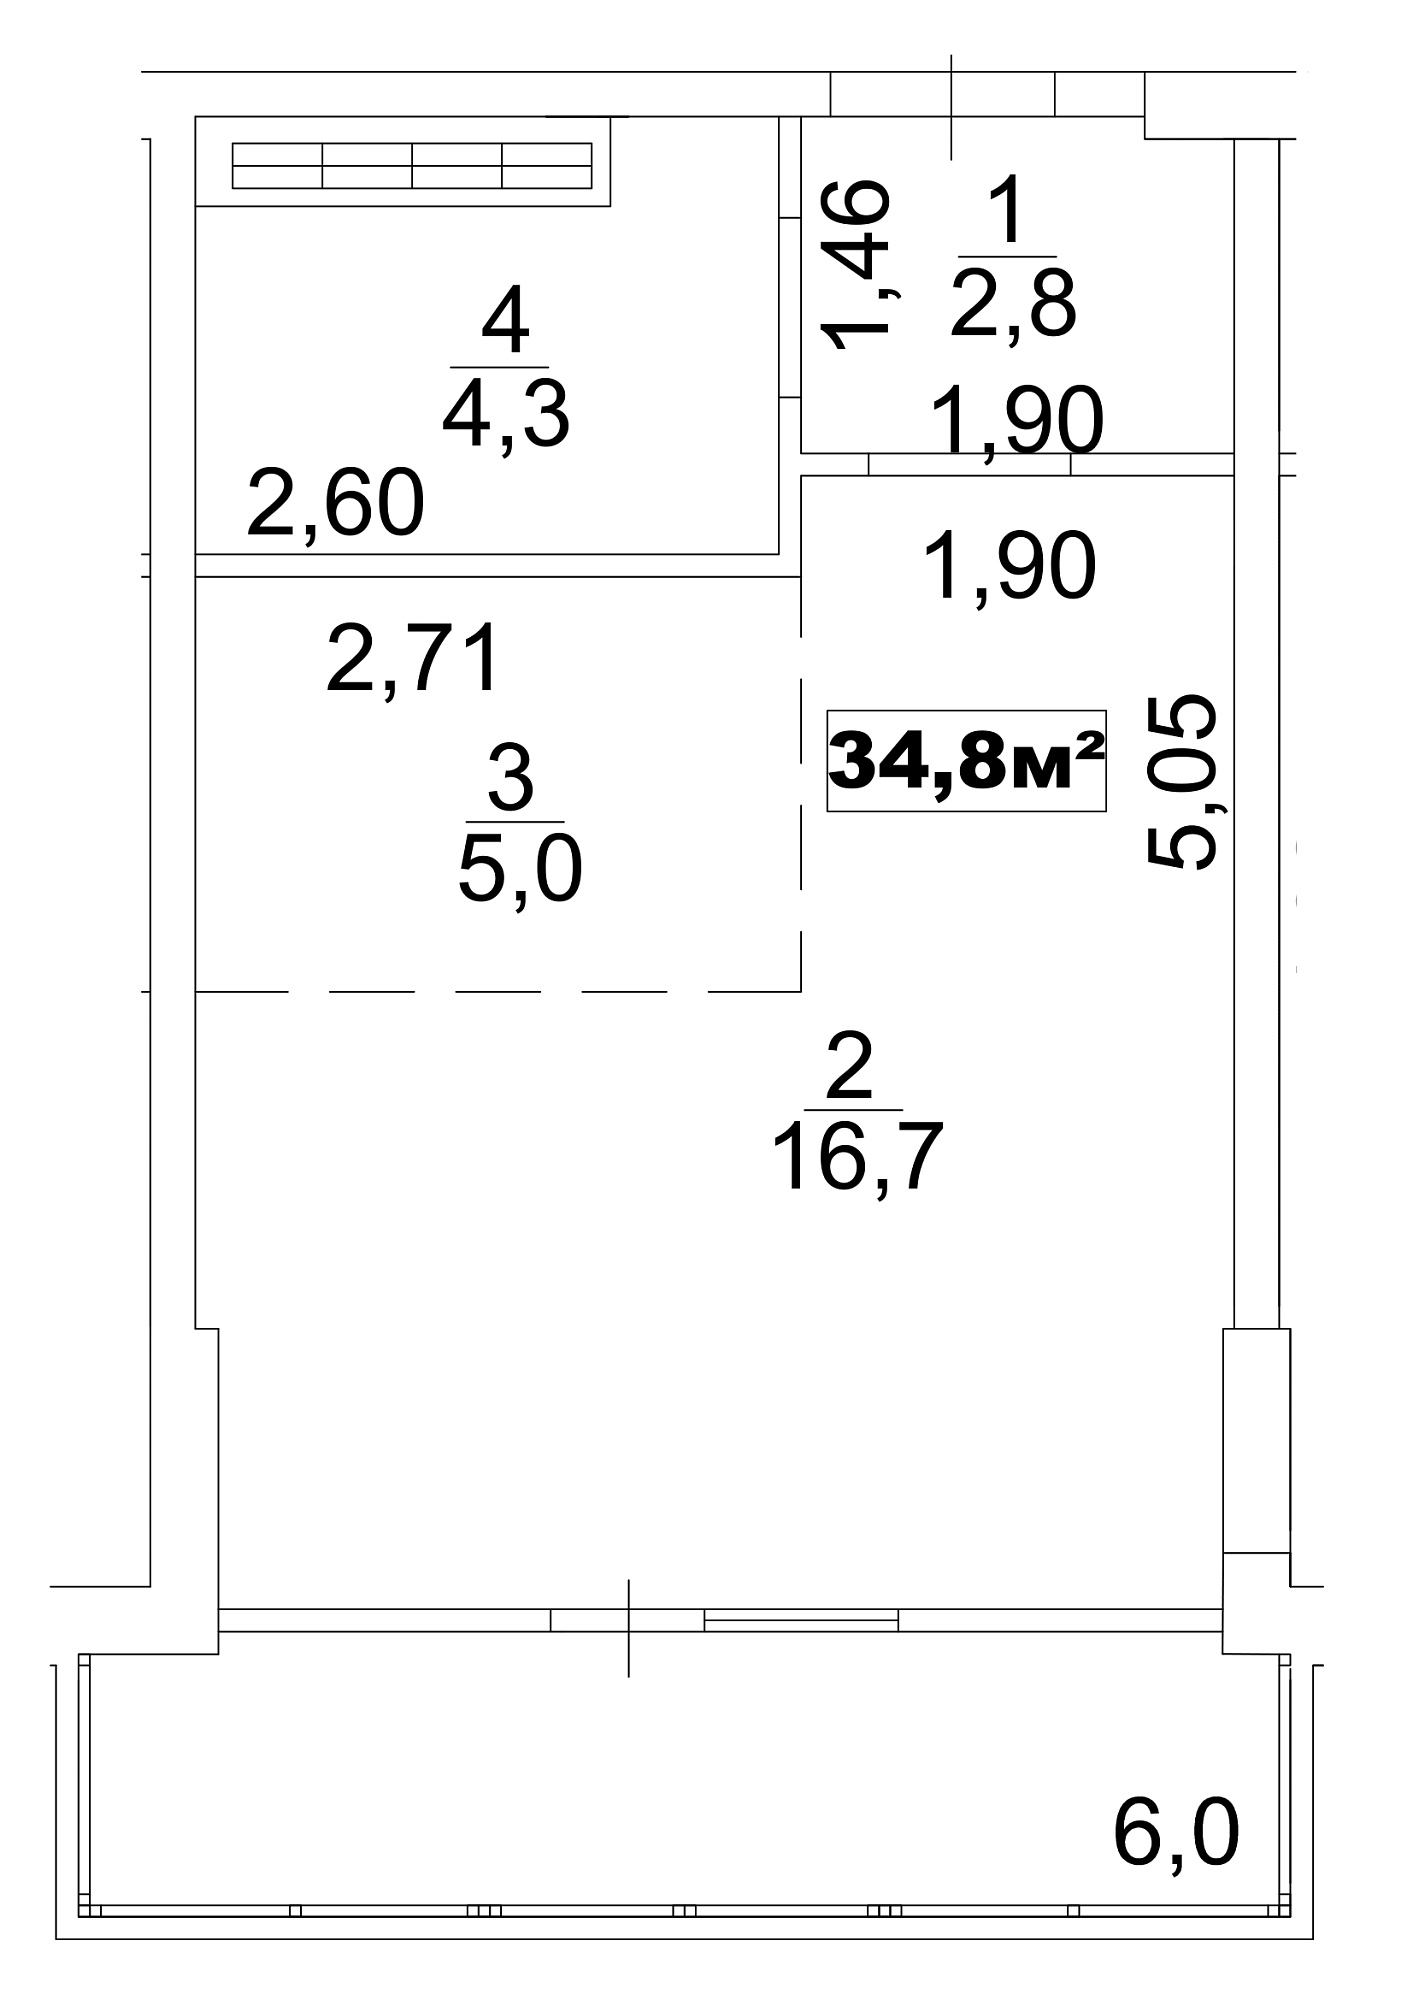 Planning Smart flats area 34.8m2, AB-13-04/0025б.